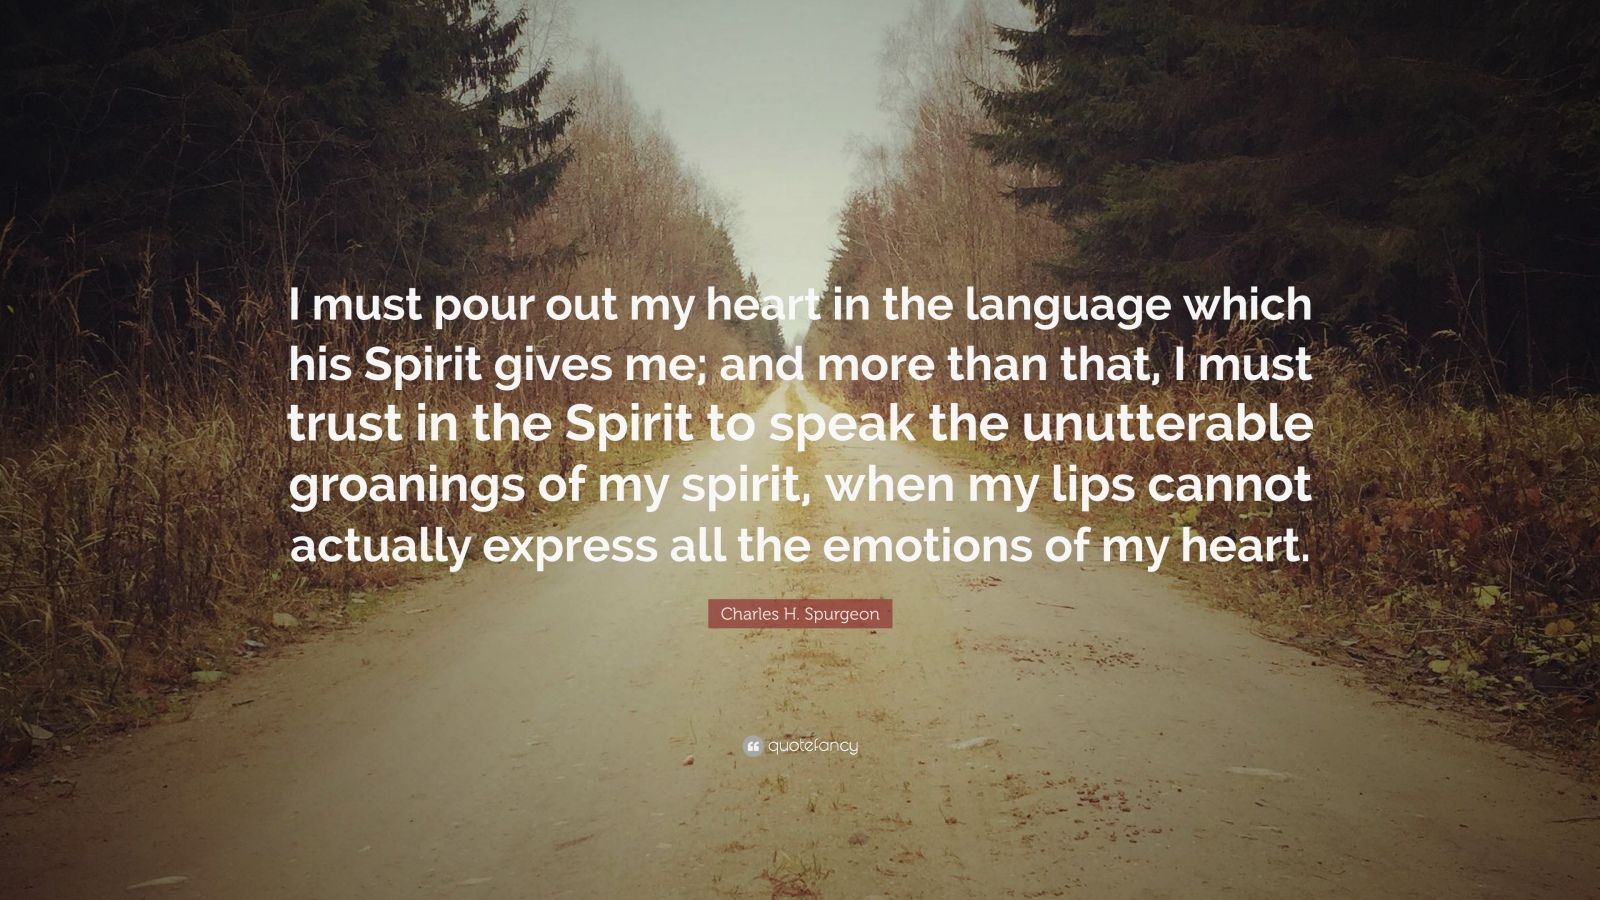 in the spirit to speak the unutterable groanings of my spirit